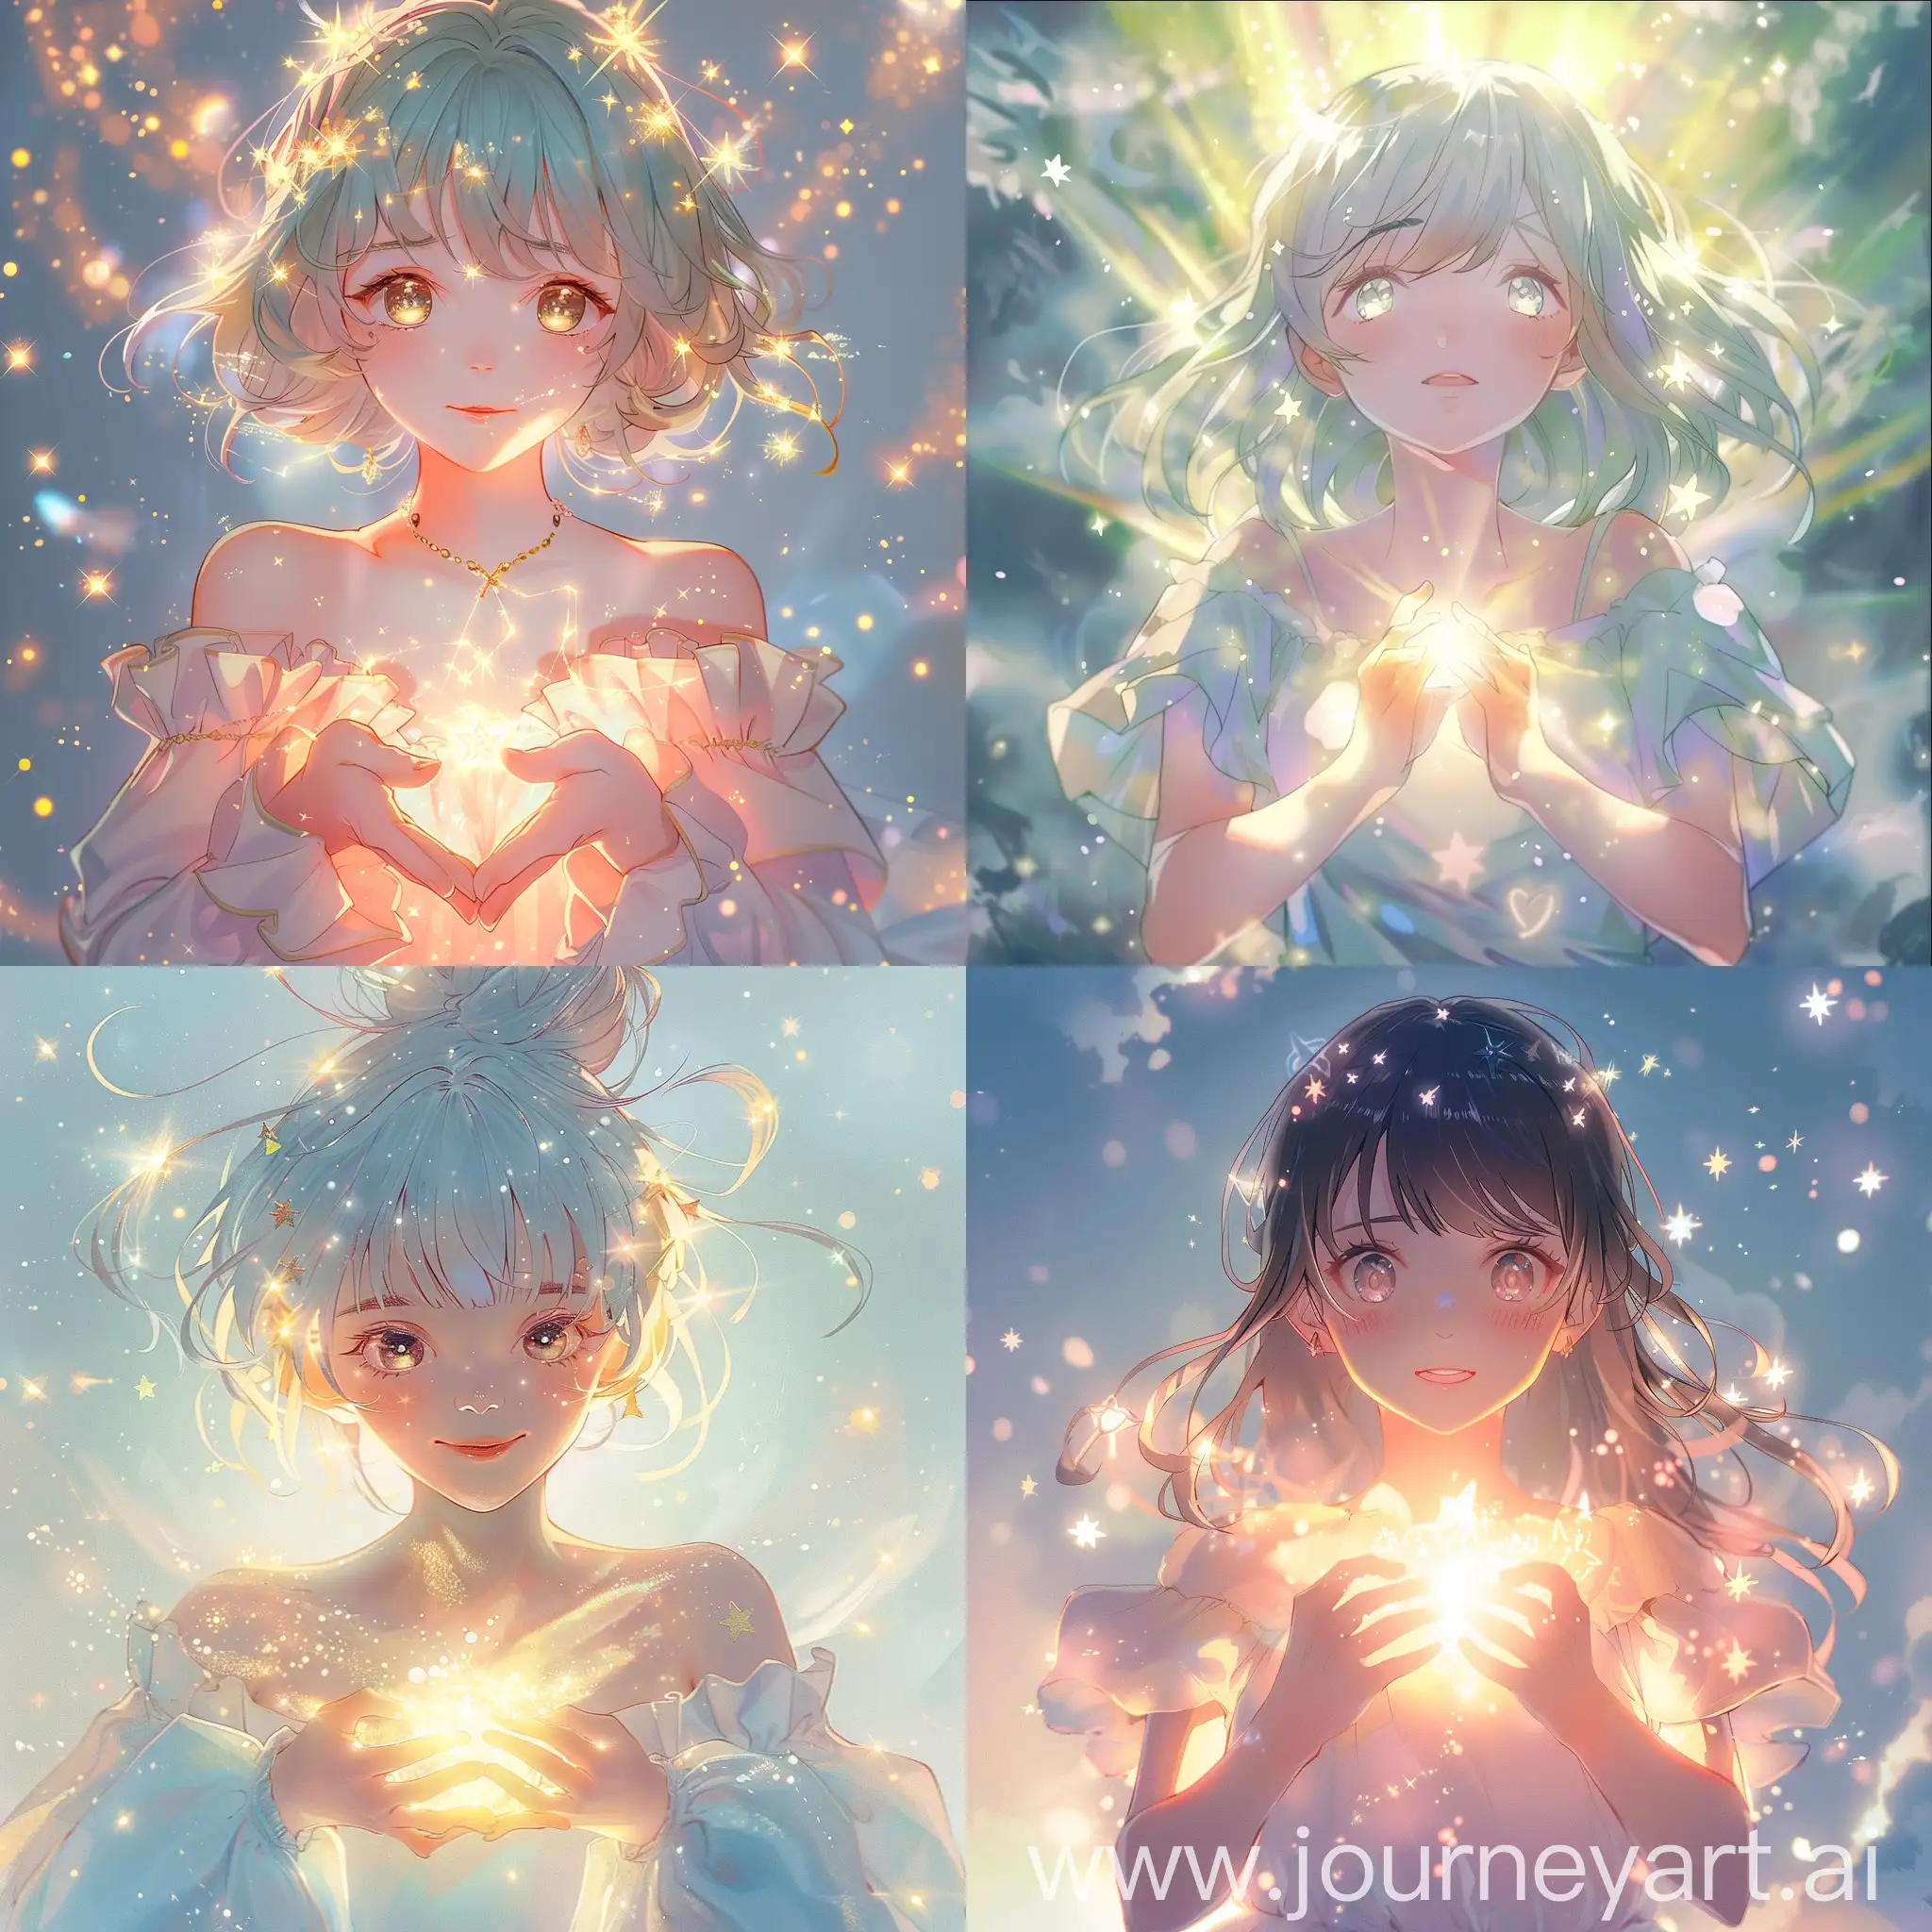 Enchanting-Anime-Girl-Embracing-Moonlit-Glow